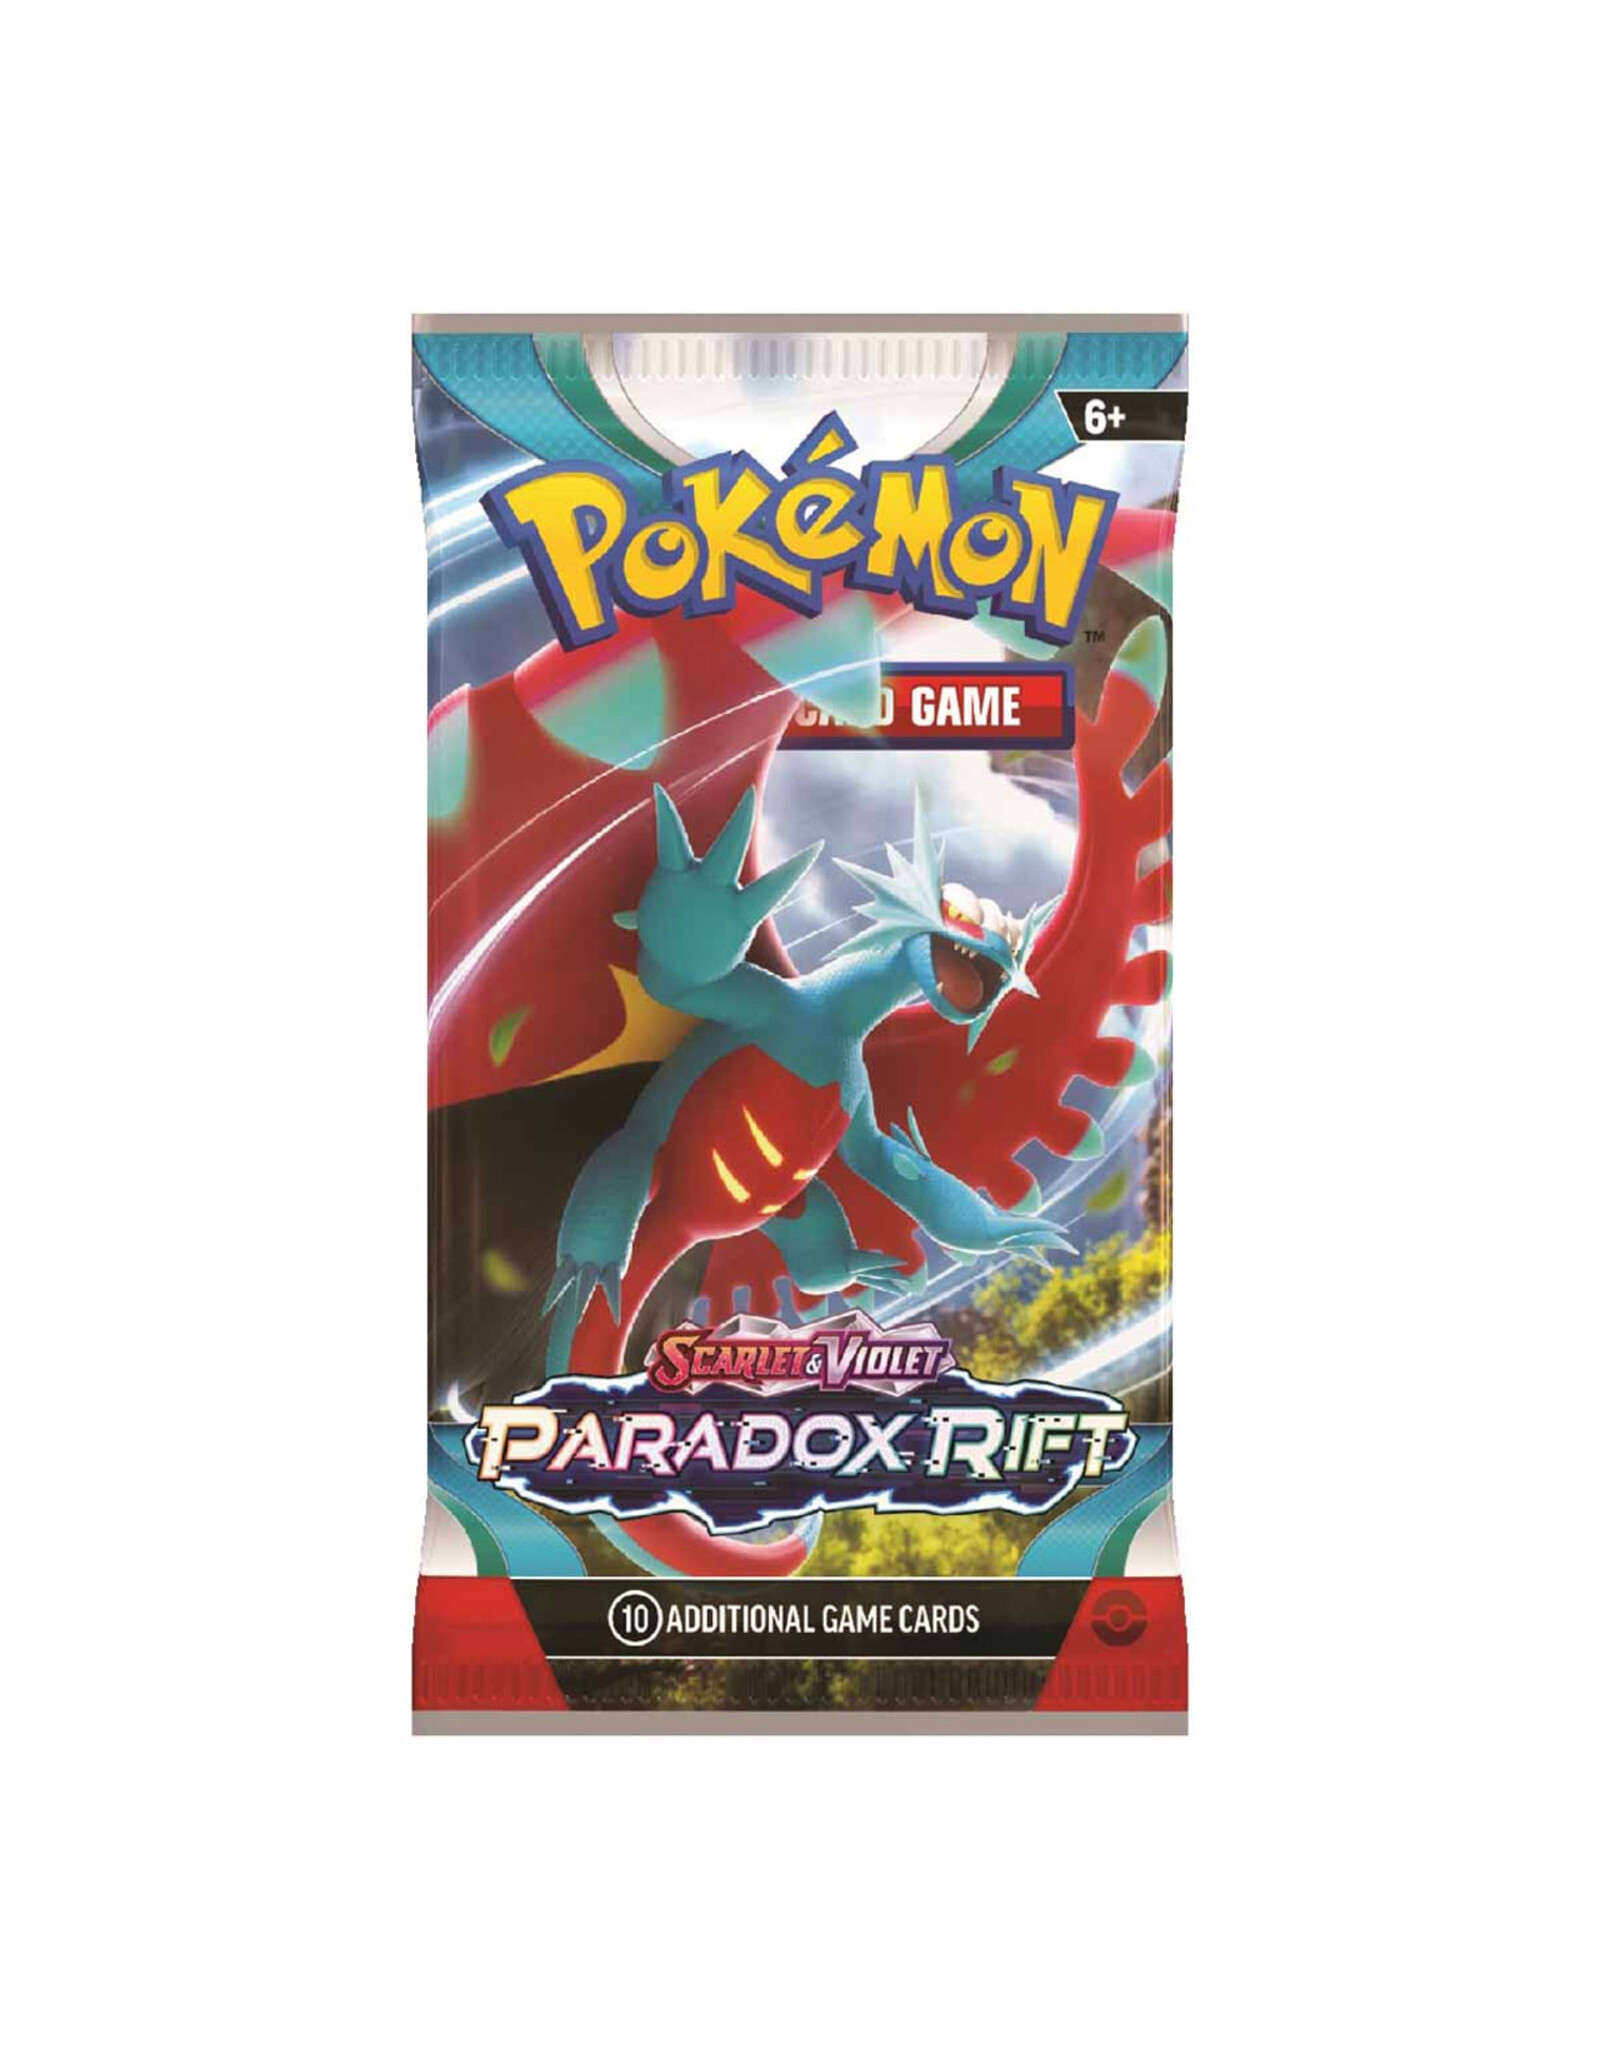 Pokemon PKM: S&V4: Paradox Rift Booster Pack